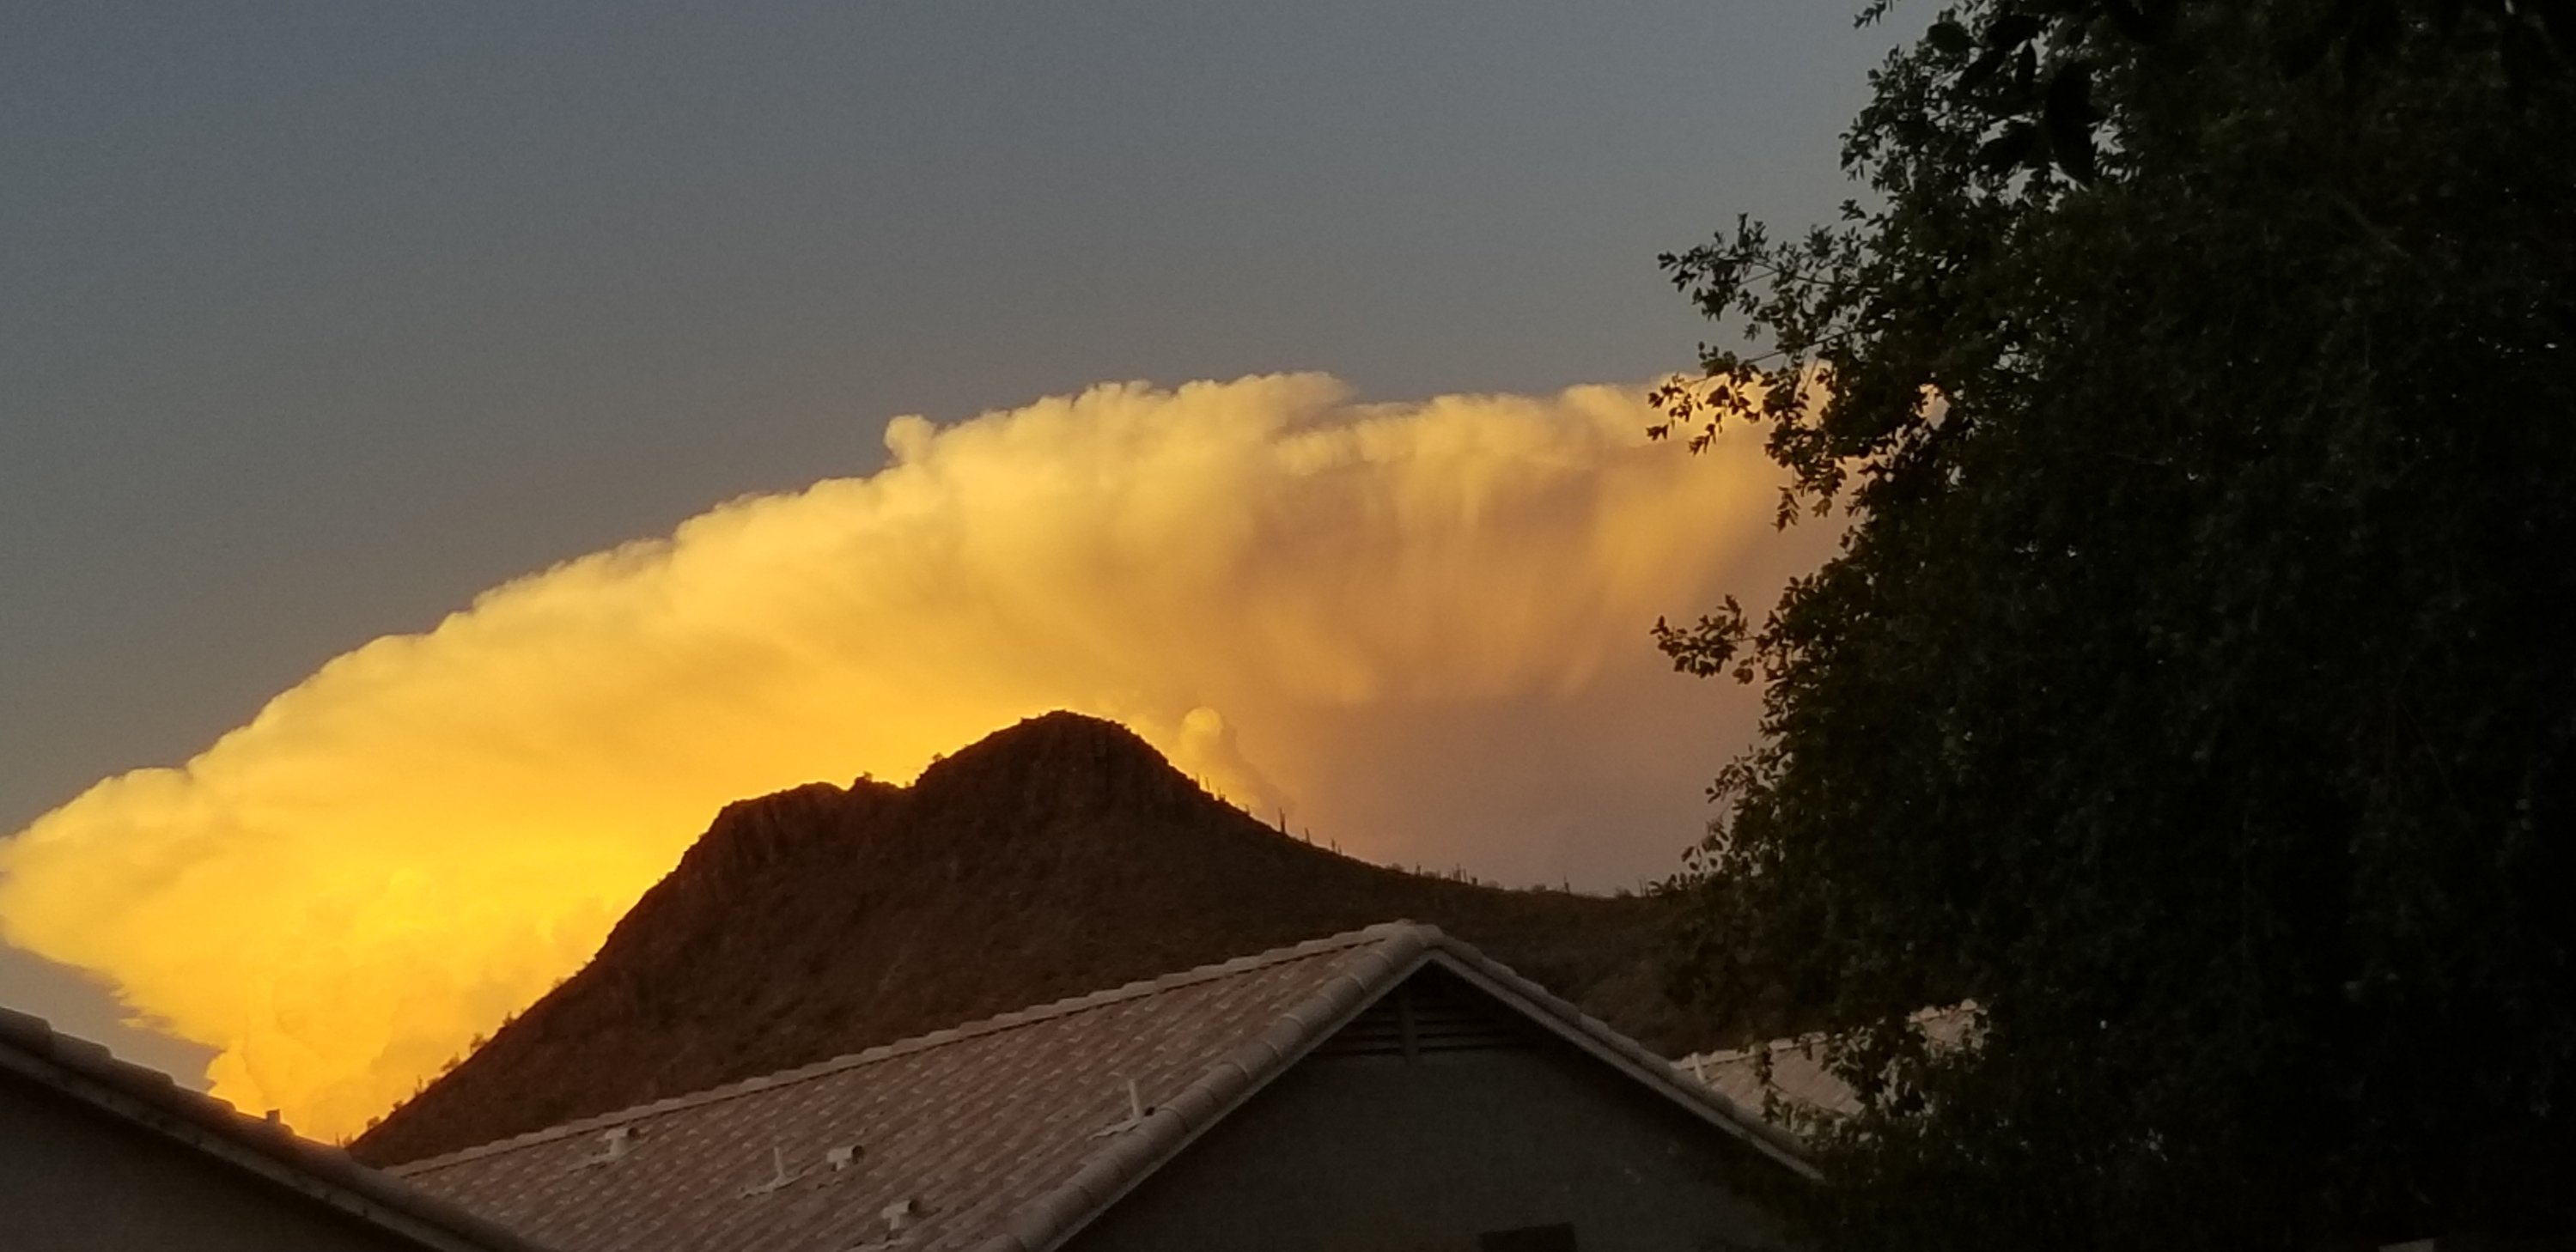 Cumulus cloud illuminated by sunset nears mountain